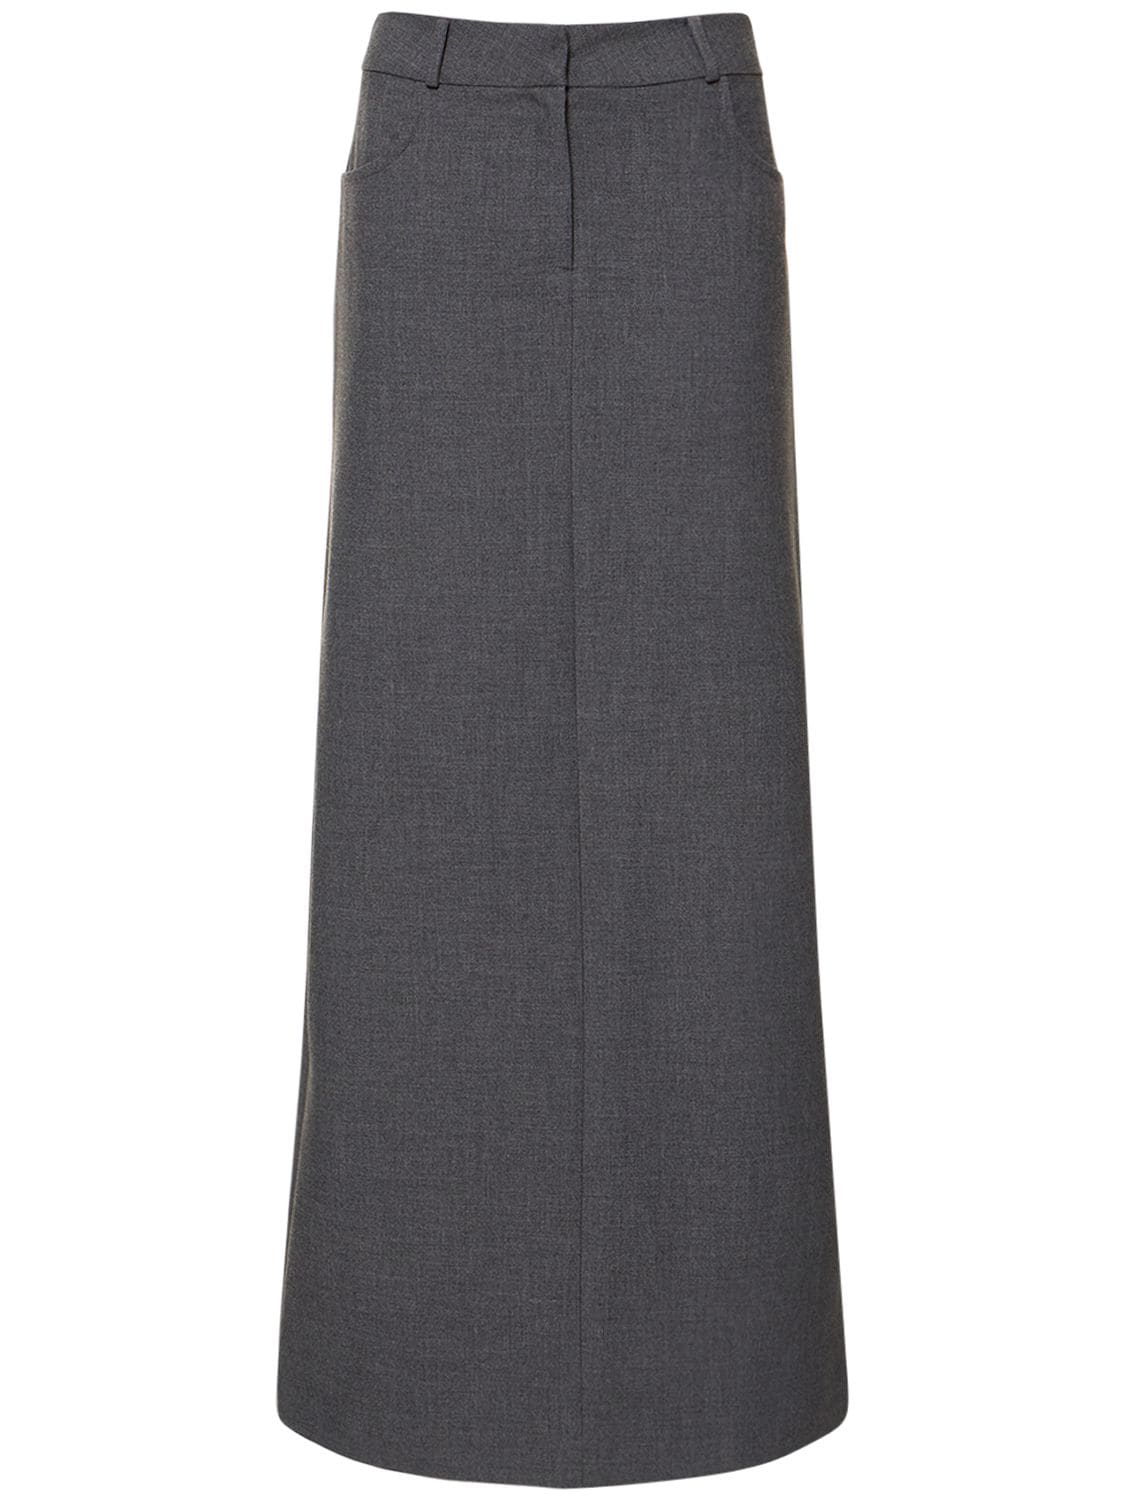 Malvo Long Pencil Skirt - Black